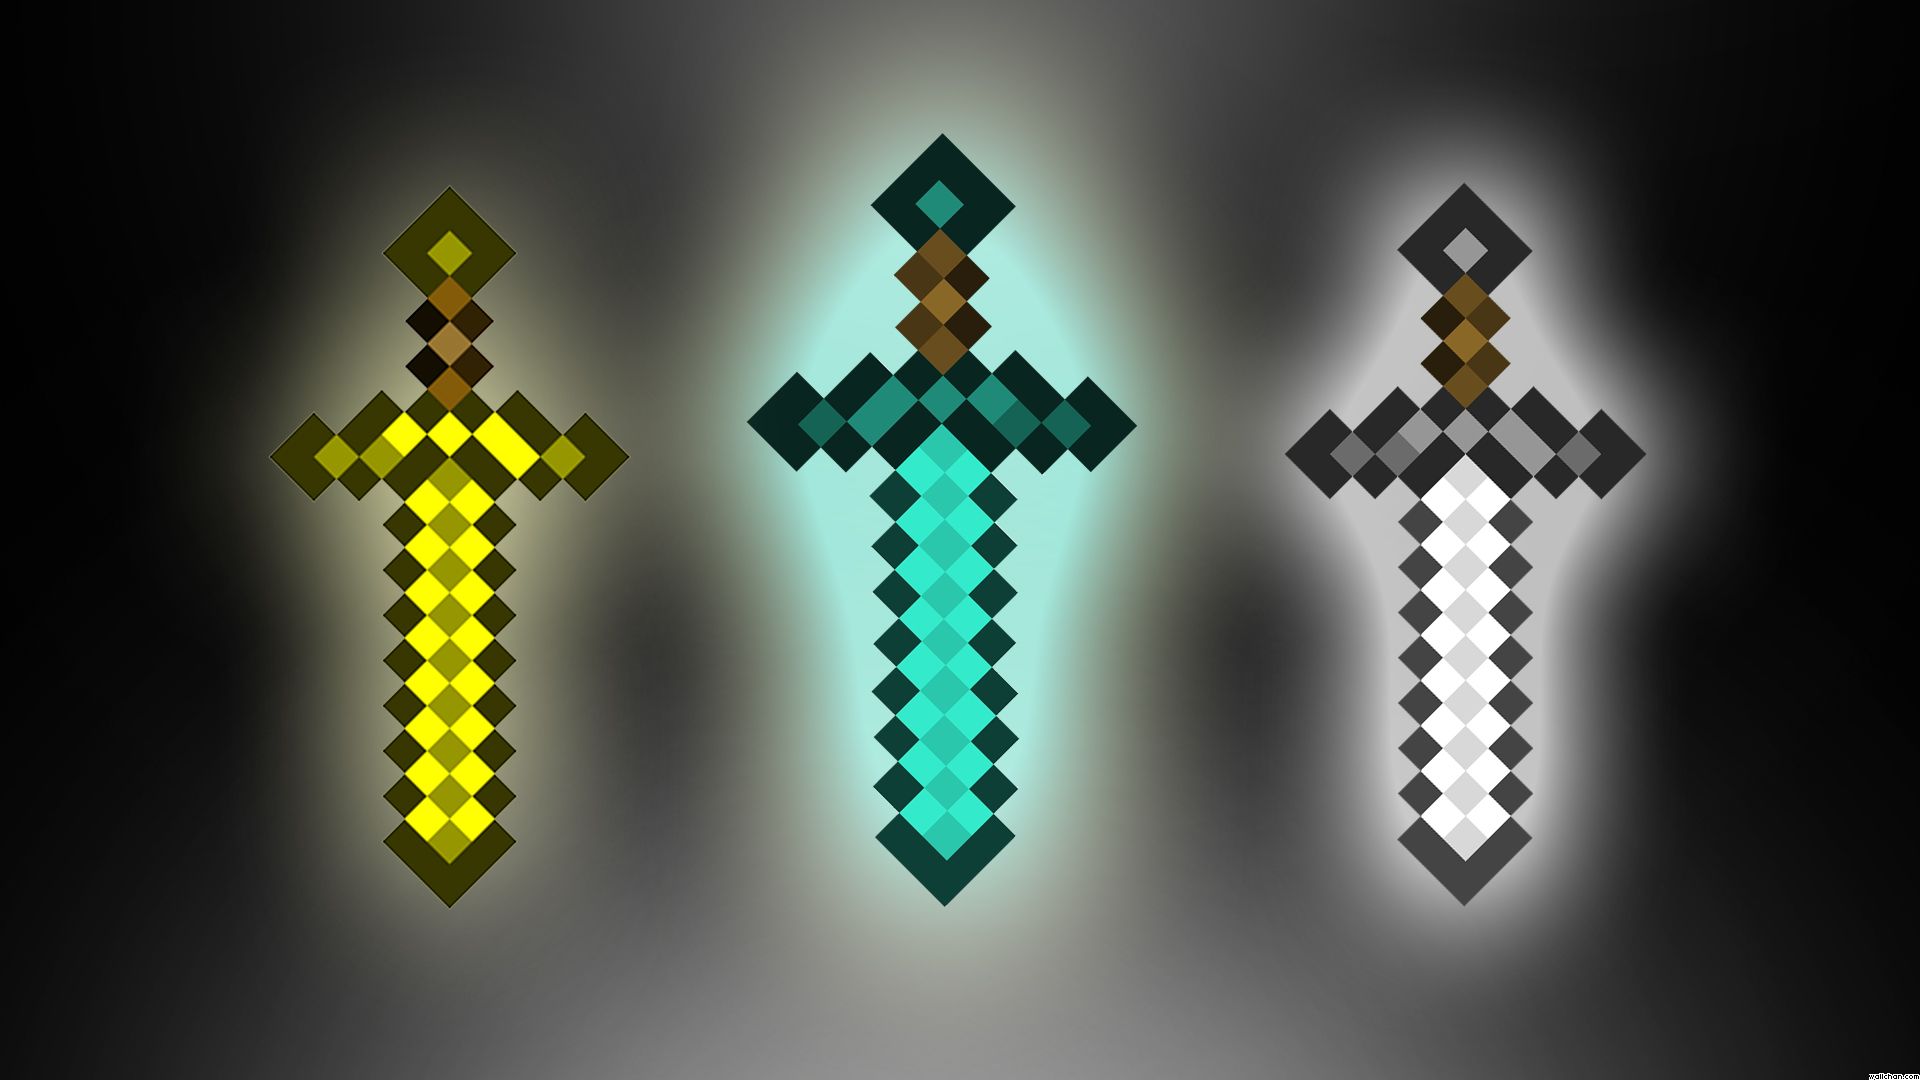 Minecraft Sword Wallpaper